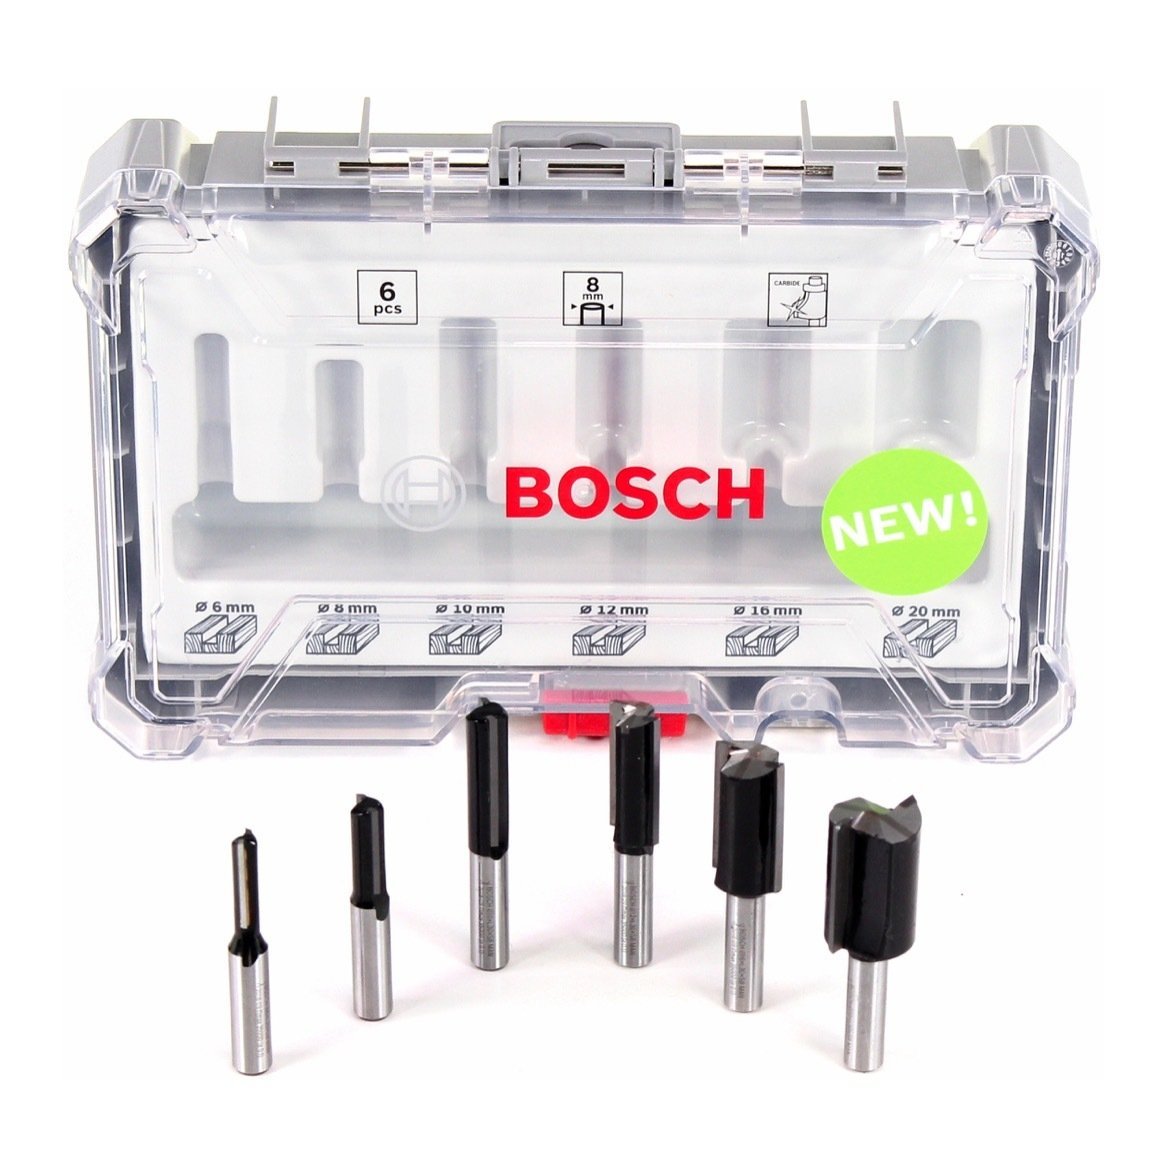 Bosch - Profesyonel 6 Parça Düz Freze Ucu Seti 8 mm Şaftlı